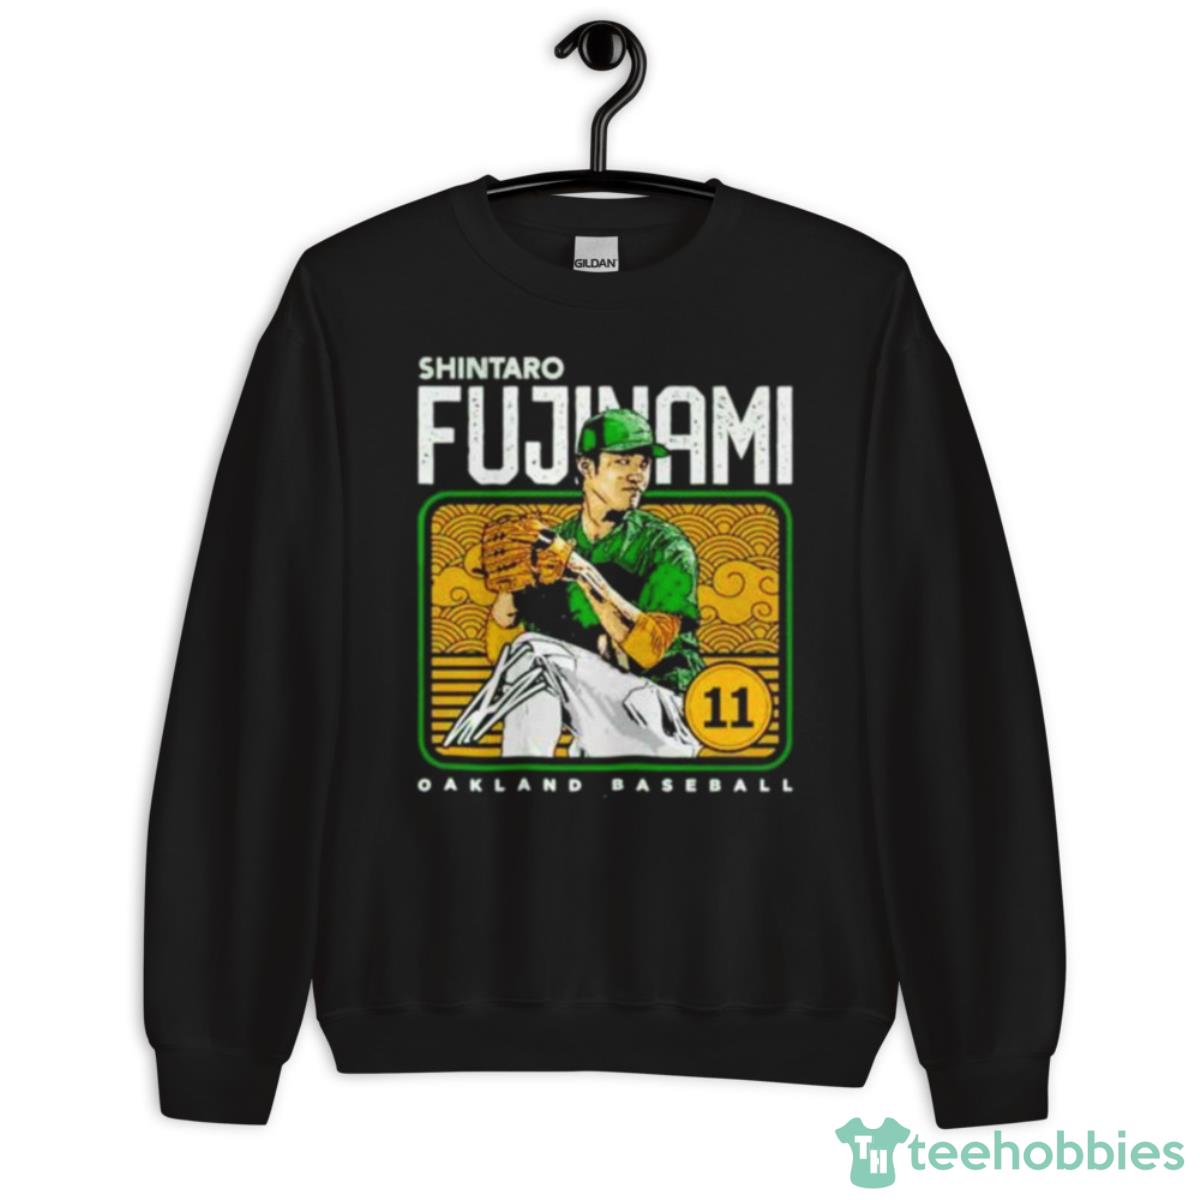 Shintaro Fujinami Oakland Athletics Baseball Poster Shirt - Unisex Crewneck Sweatshirt